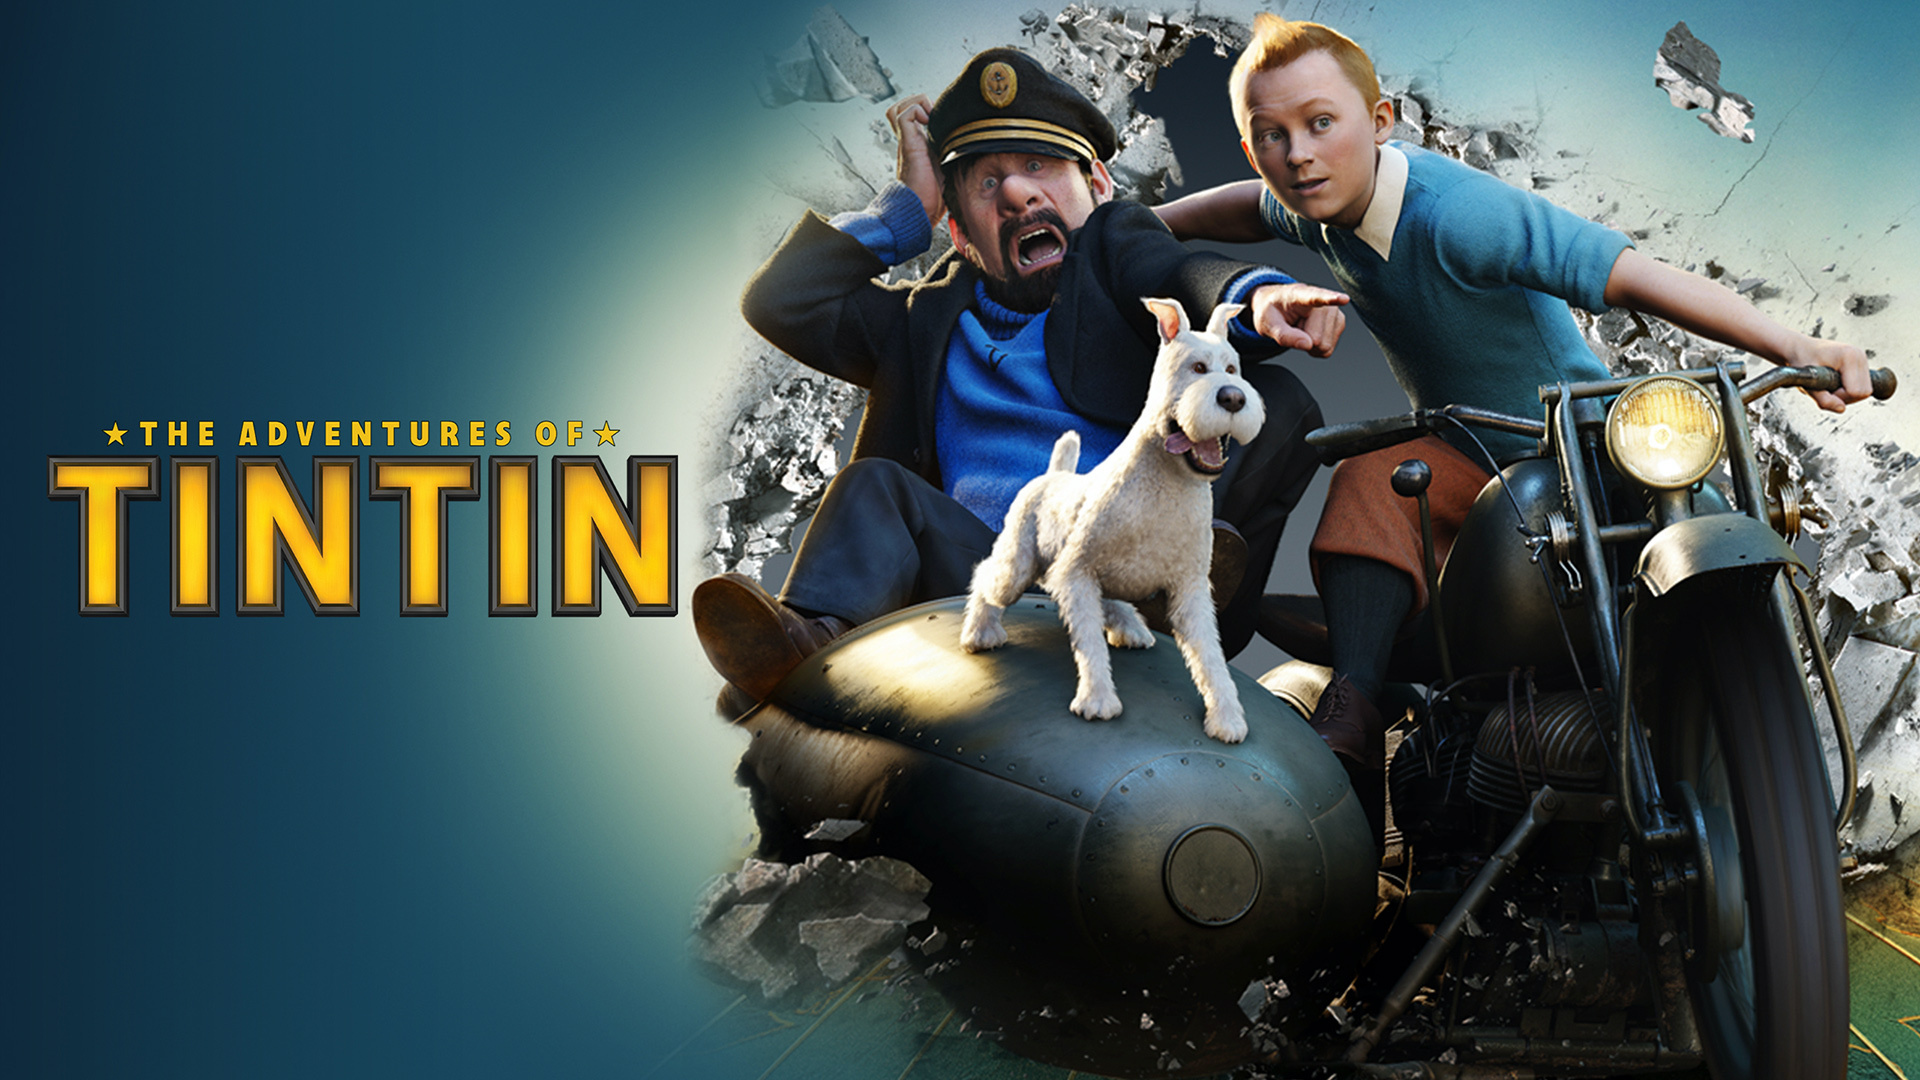 The Adventures of Tintin - Watch Full Movie on Paramount Plus